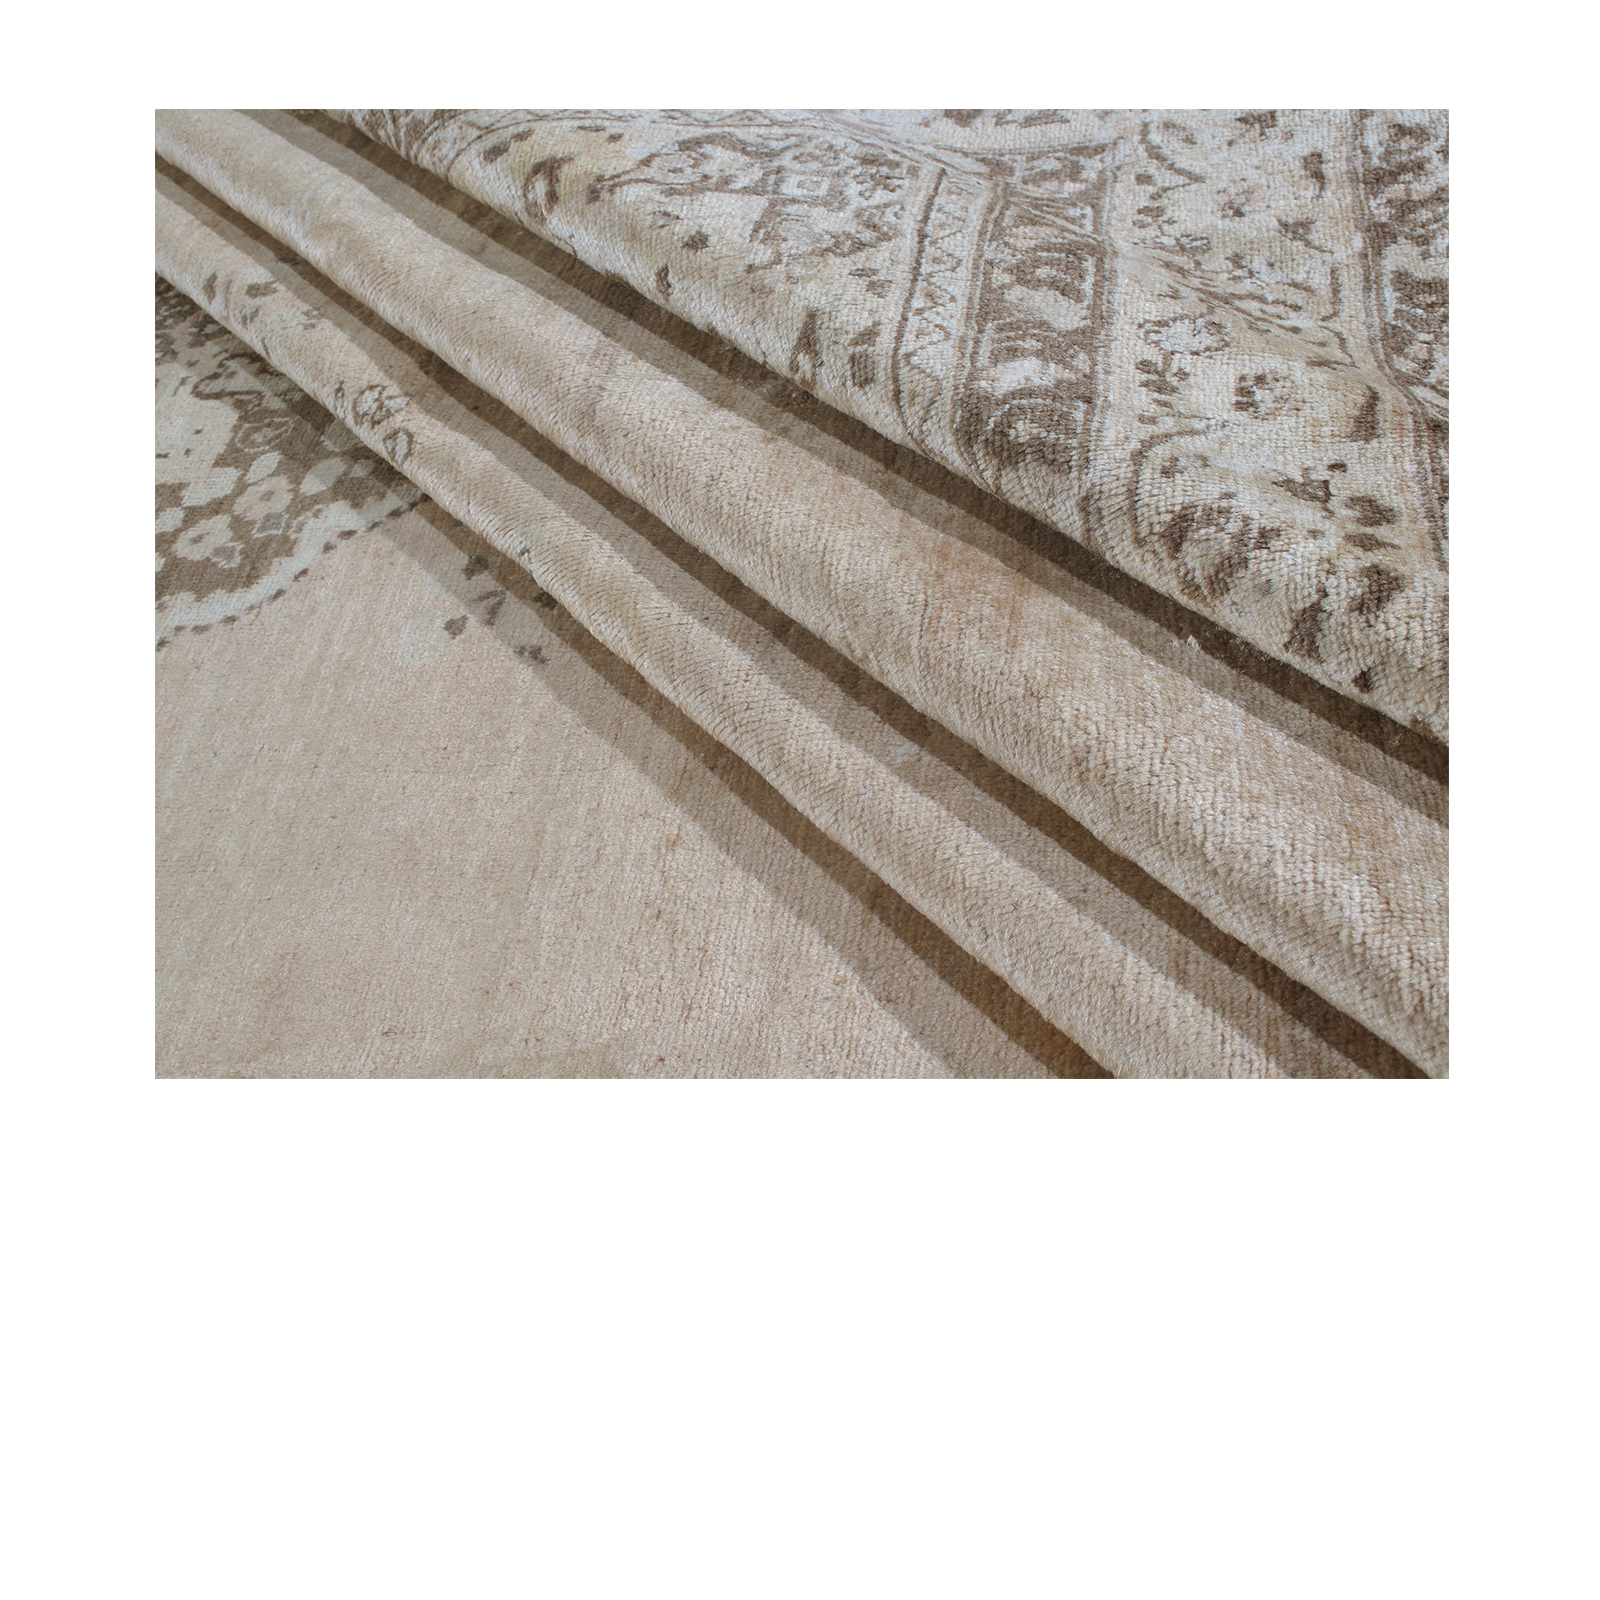 Tabriz rug is made of 100% wool